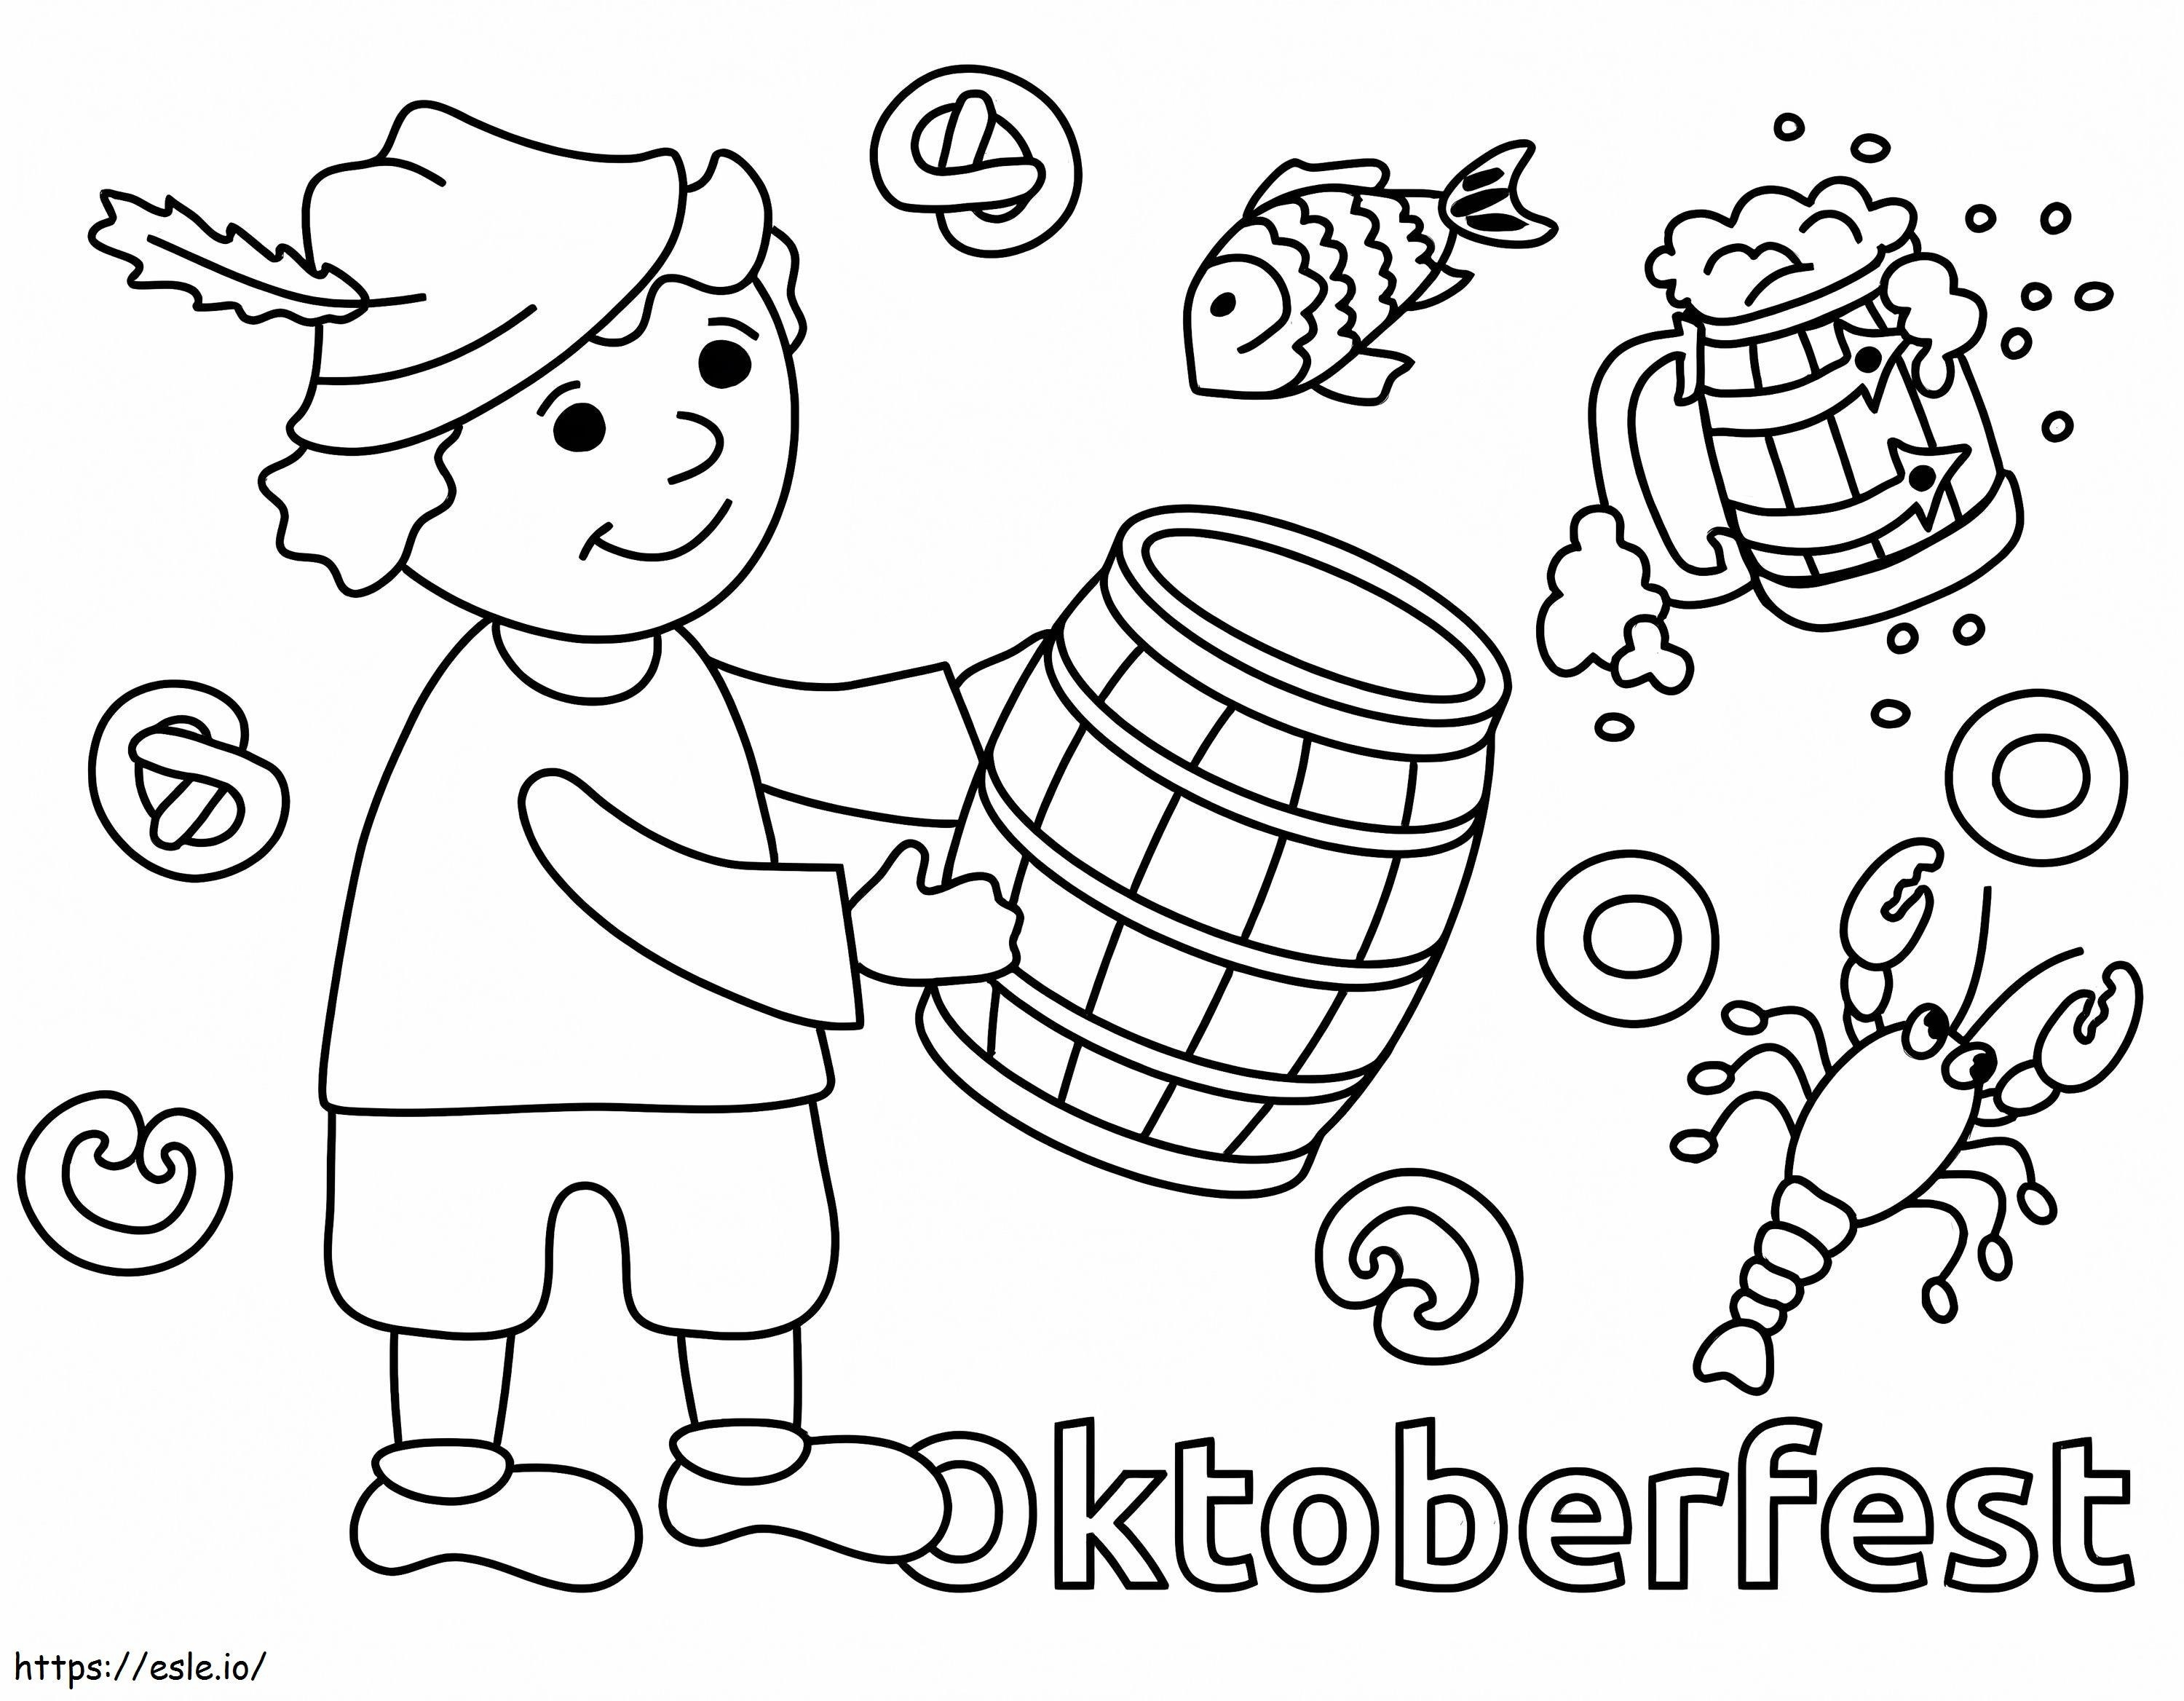 Cervejaria Oktoberfest para colorir